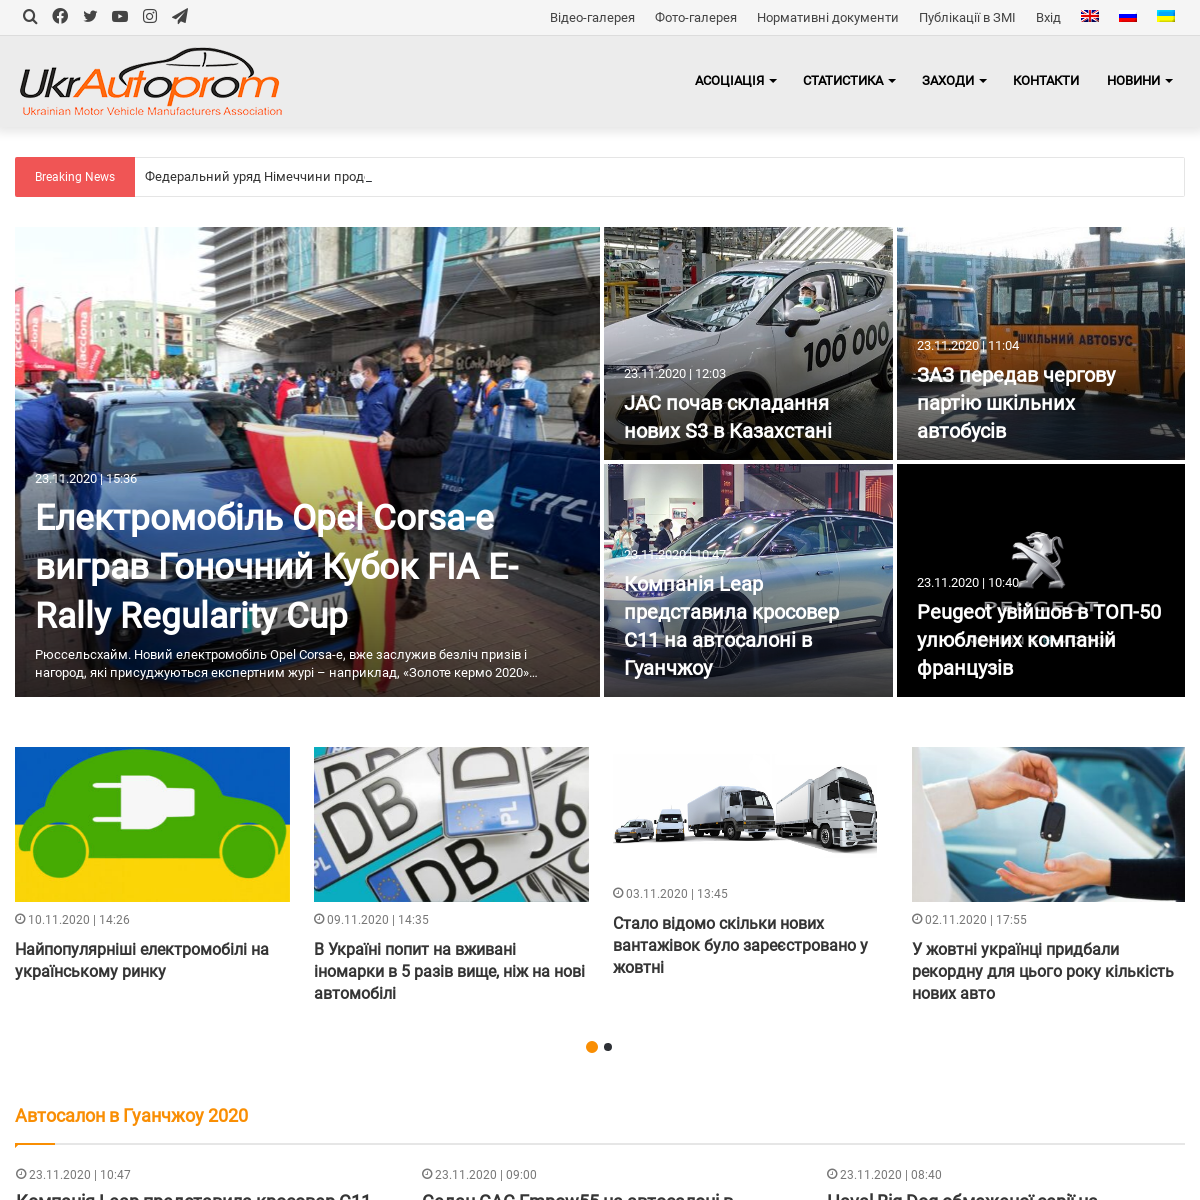 A complete backup of ukrautoprom.com.ua